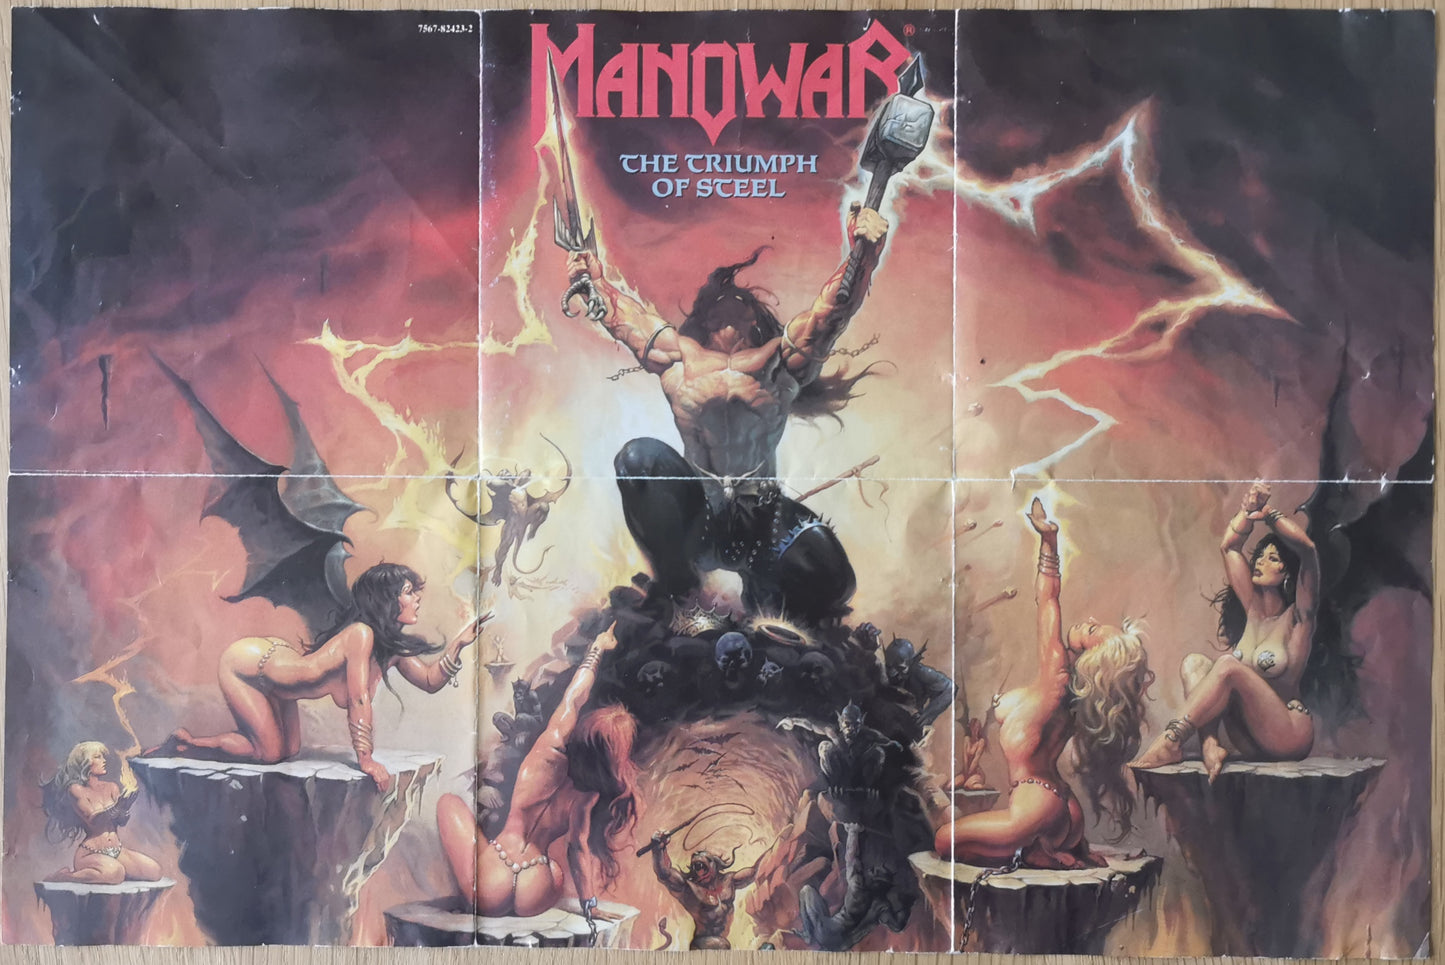 MANOWAR - The Triumph Of Steel